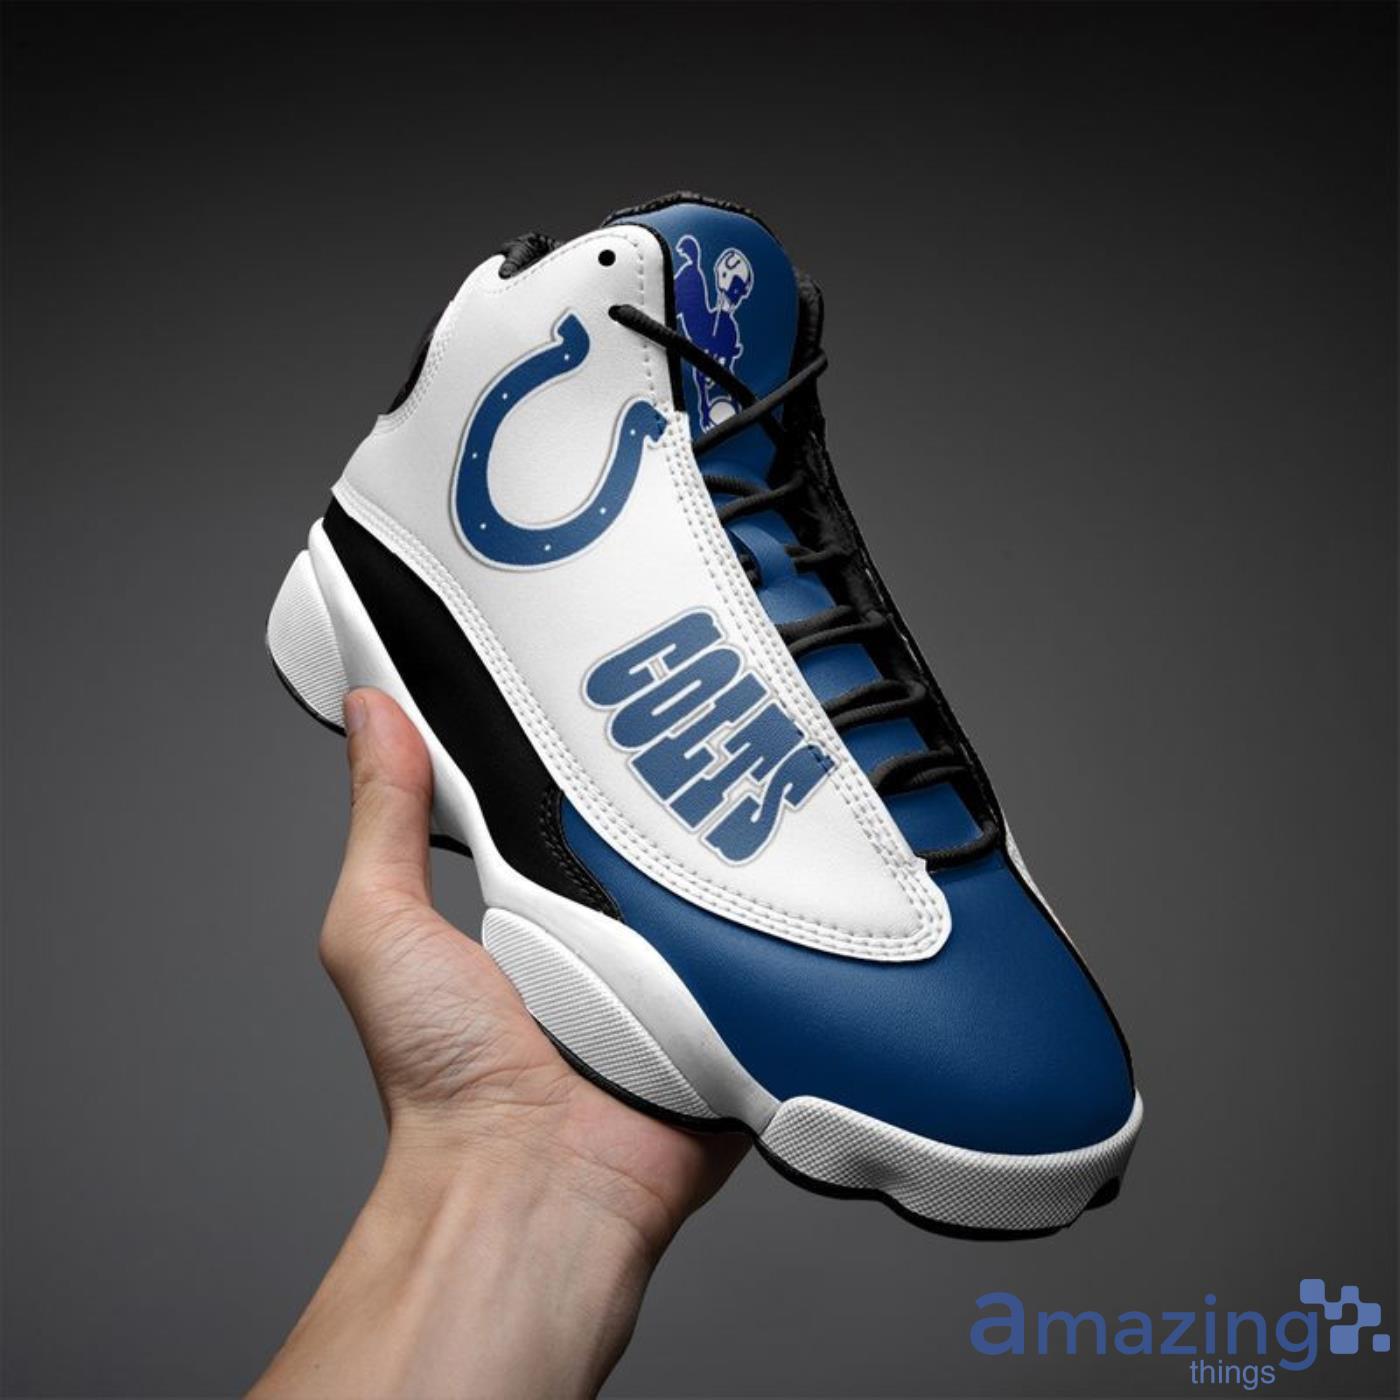 Houston Texans NFL Personalized Air Jordan 13 Sport Shoes - Growkoc